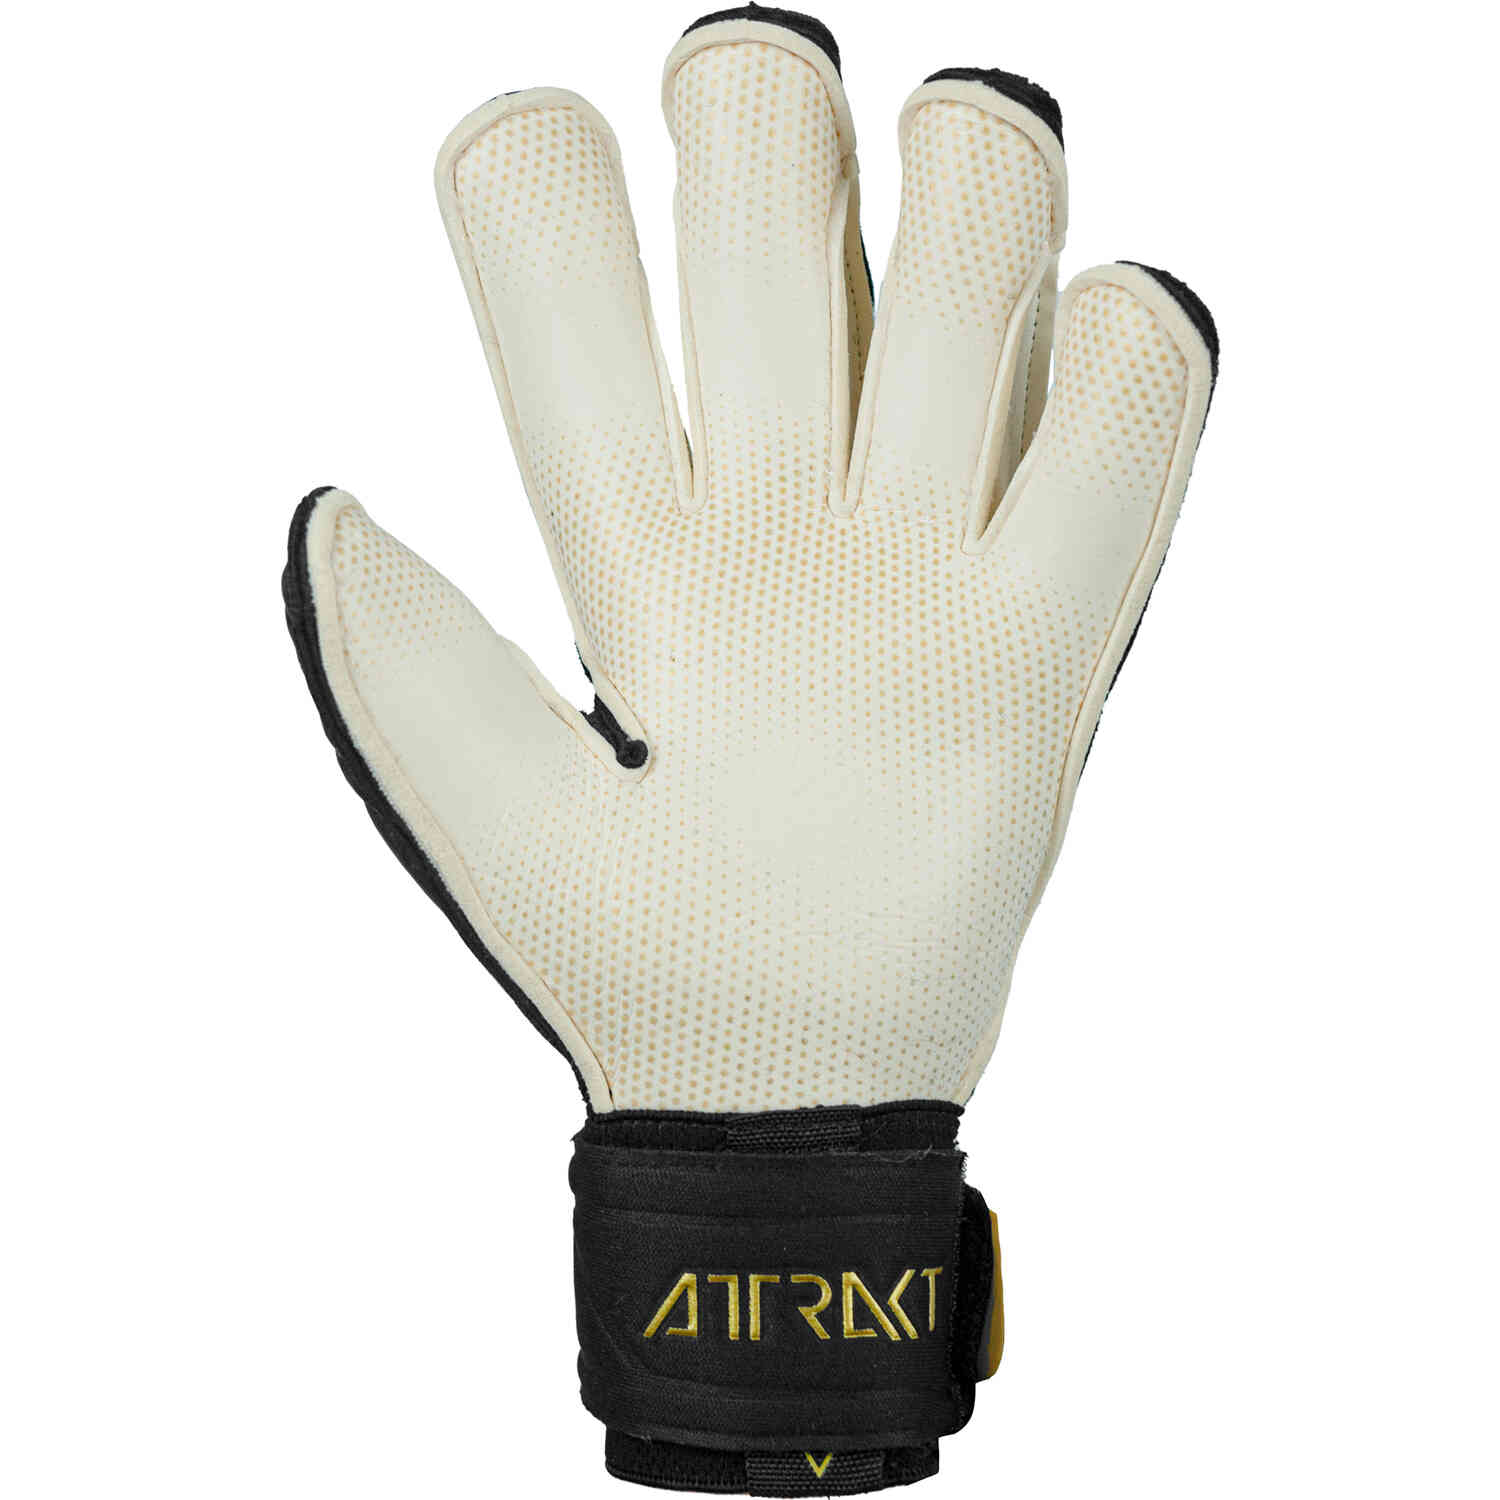 Reusch Attrakt Gold X Glueprint Ortho-Tec Goalkeeper Gloves – Black & Gold